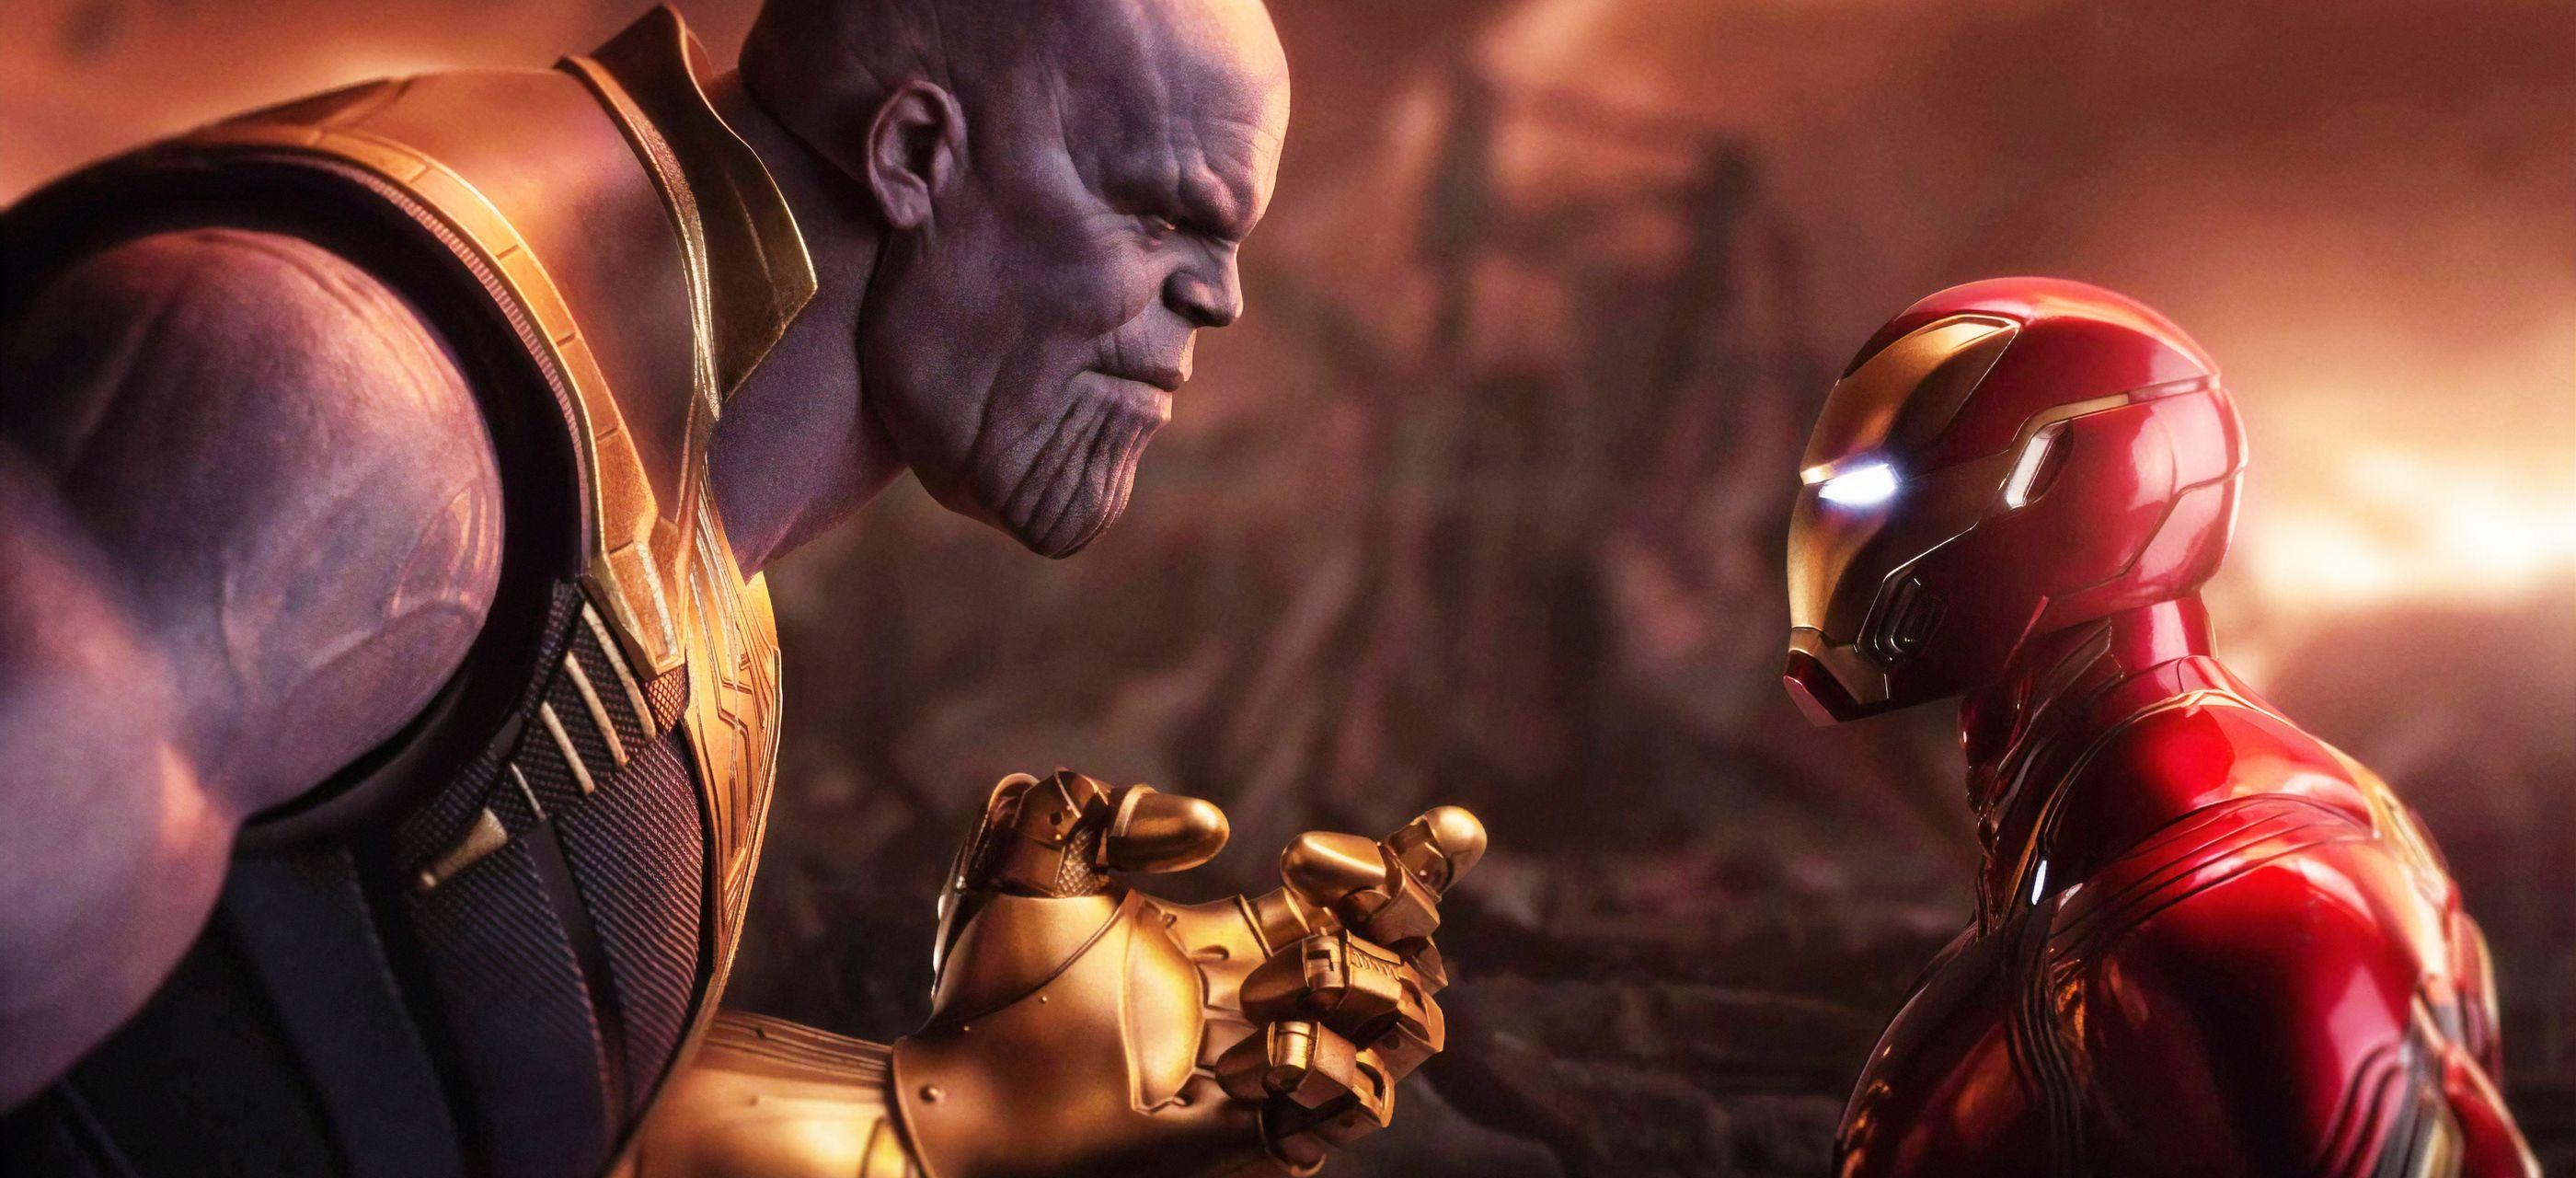 Thanos And Iron Man Wallpapers Top Free Thanos And Iron Man Backgrounds Wallpaperaccess